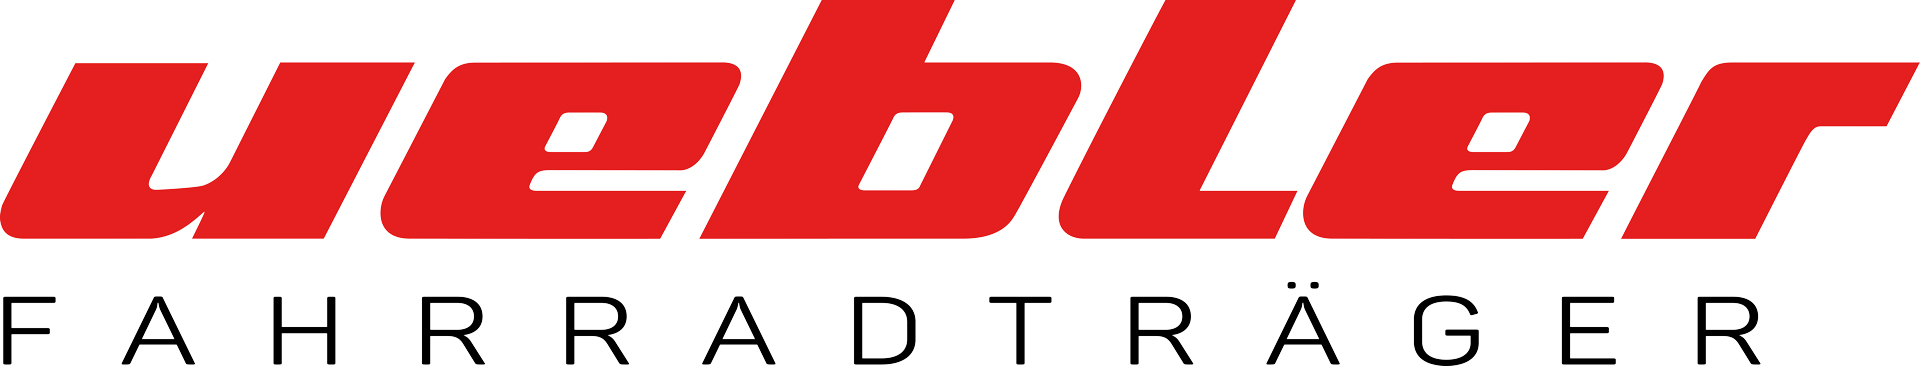 Uebler Logo Slider